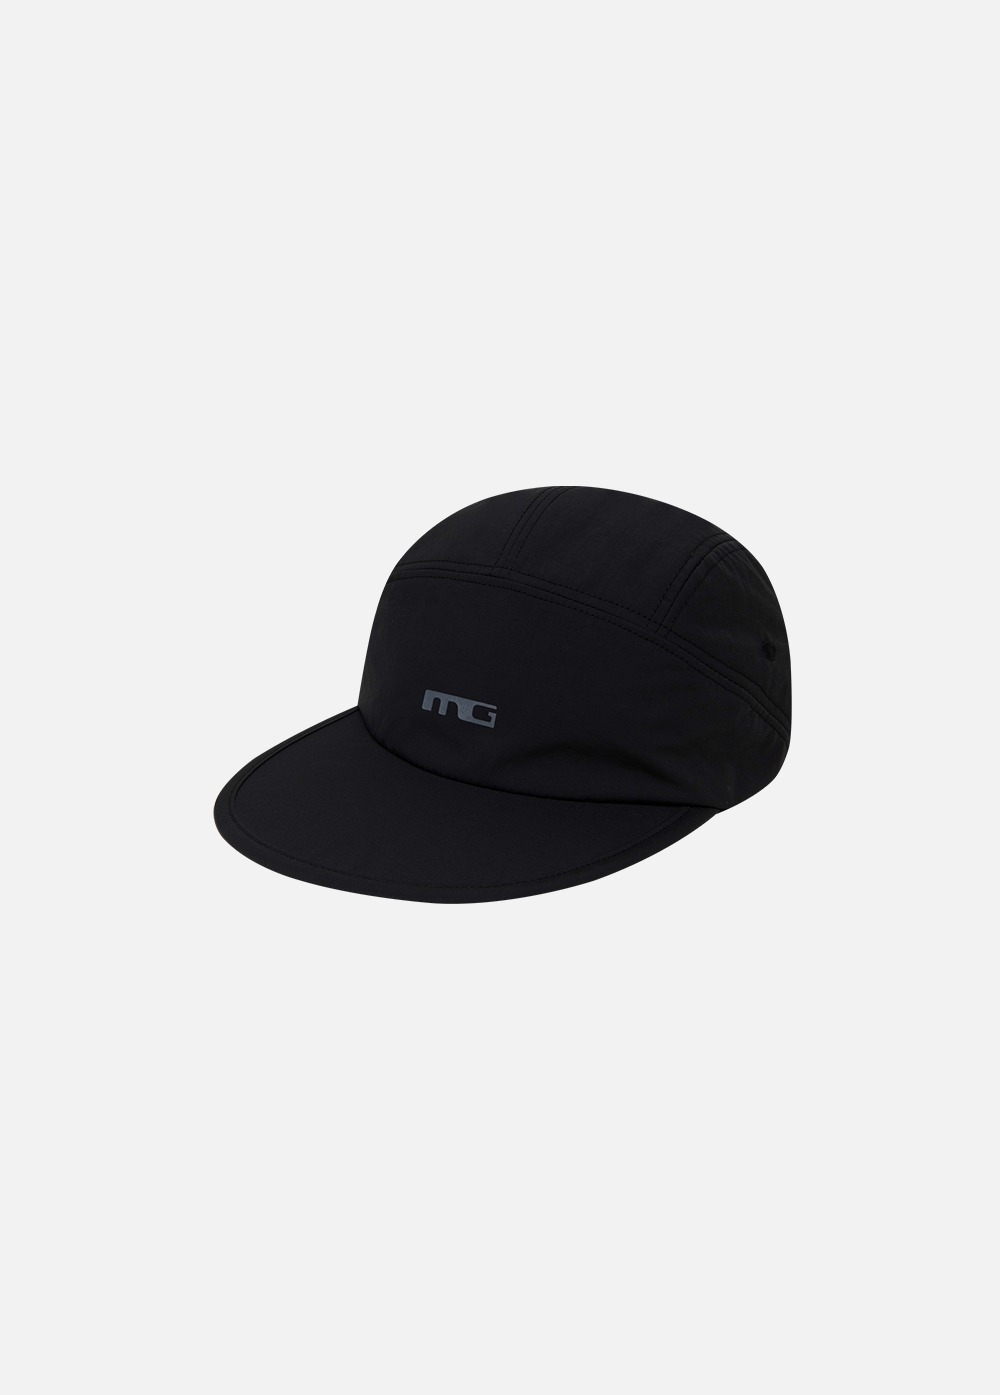 BASIC MG LOGO NYLON CAP black